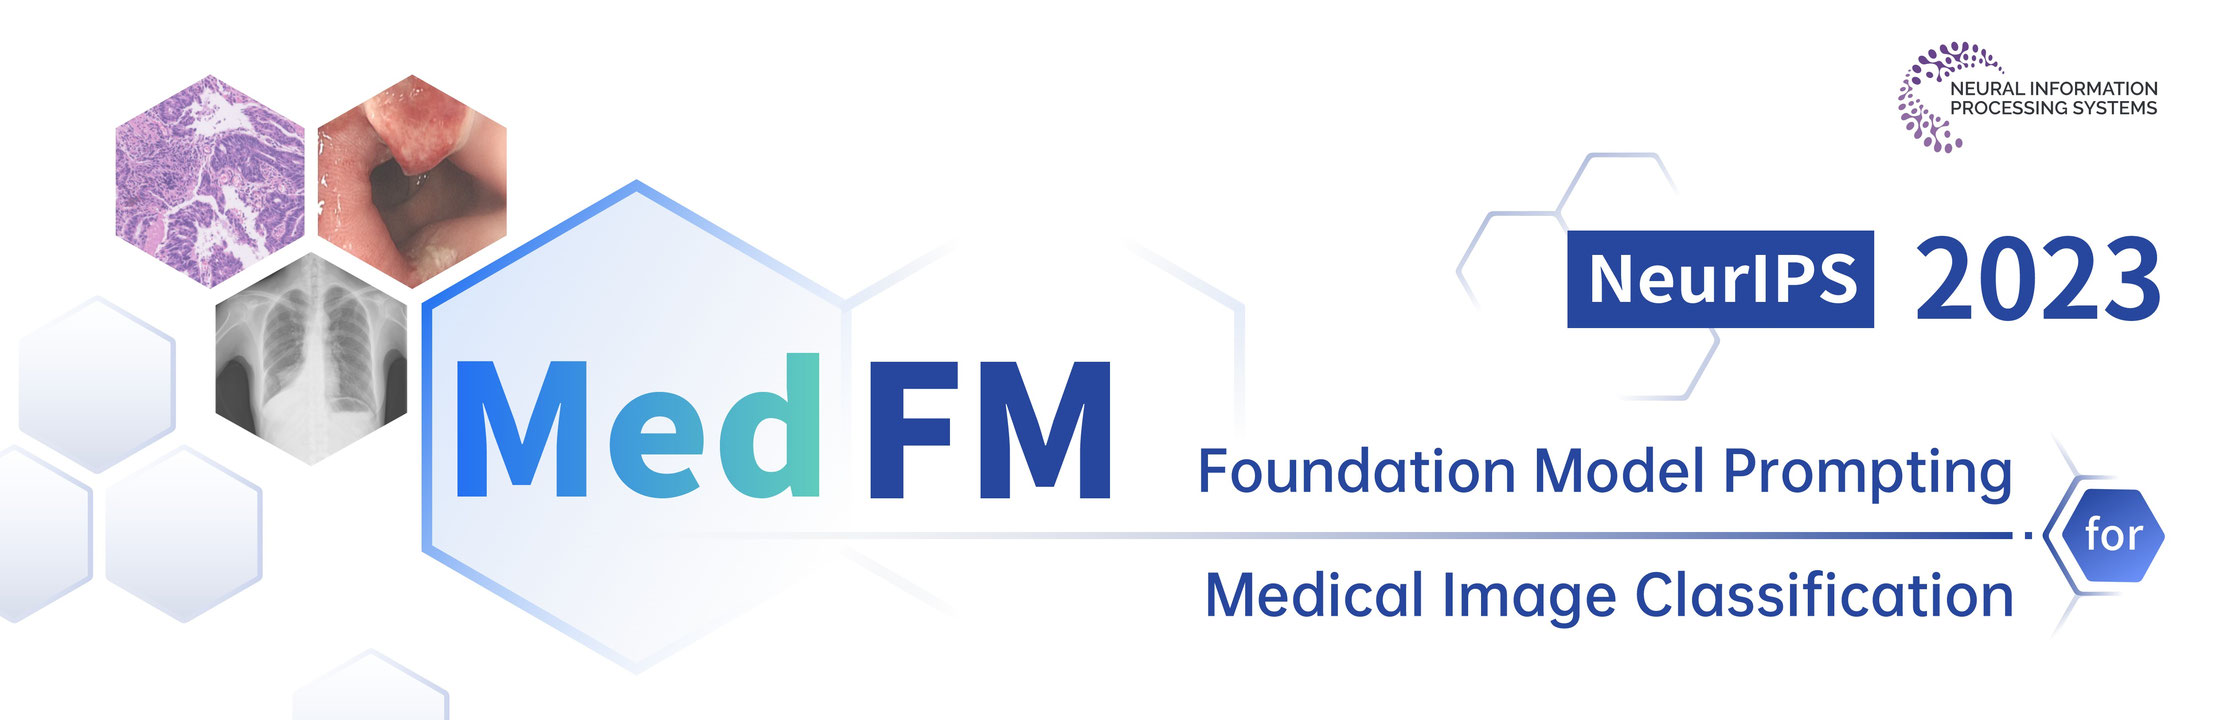 Foundation Model Prompting for Medical Image Classification Banner